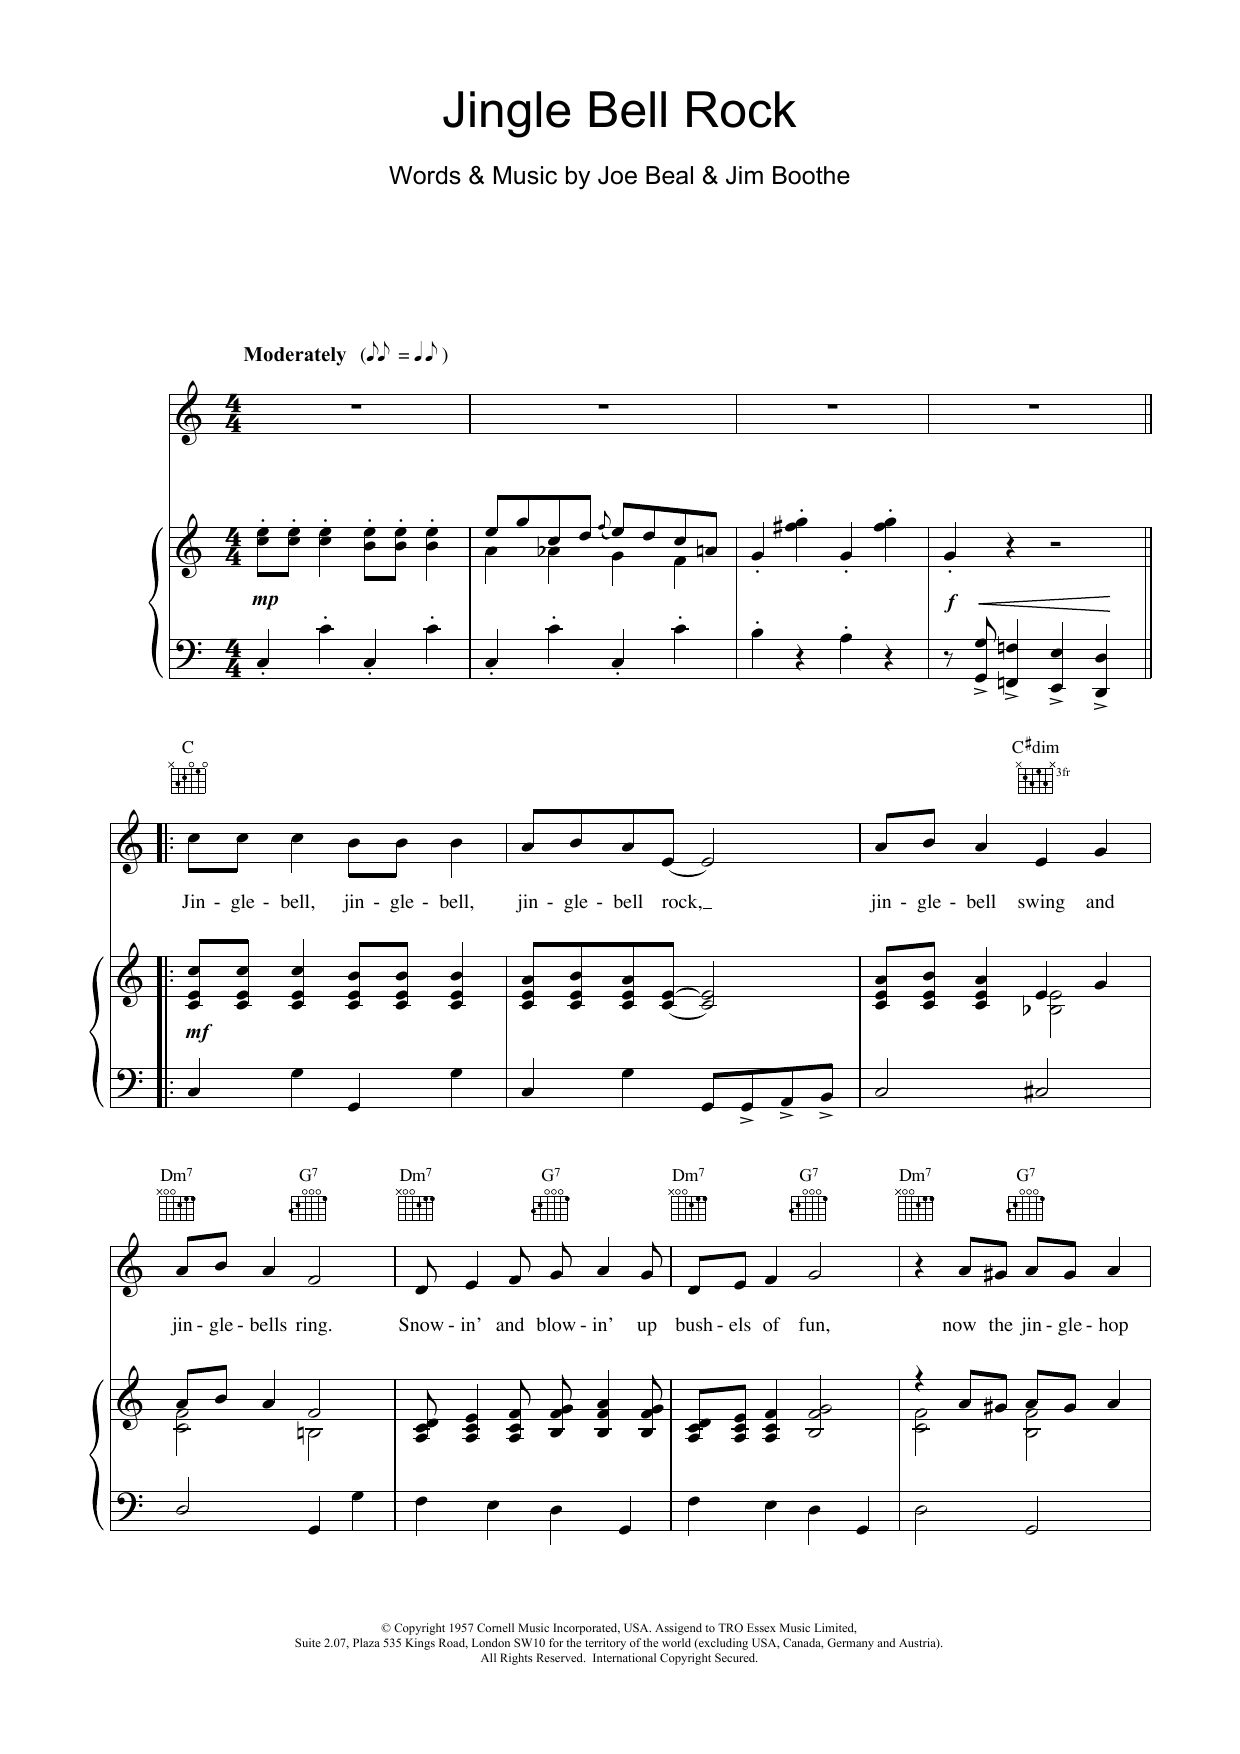 Bobby Helms Jingle-Bell Rock Sheet Music Notes & Chords for Ukulele - Download or Print PDF